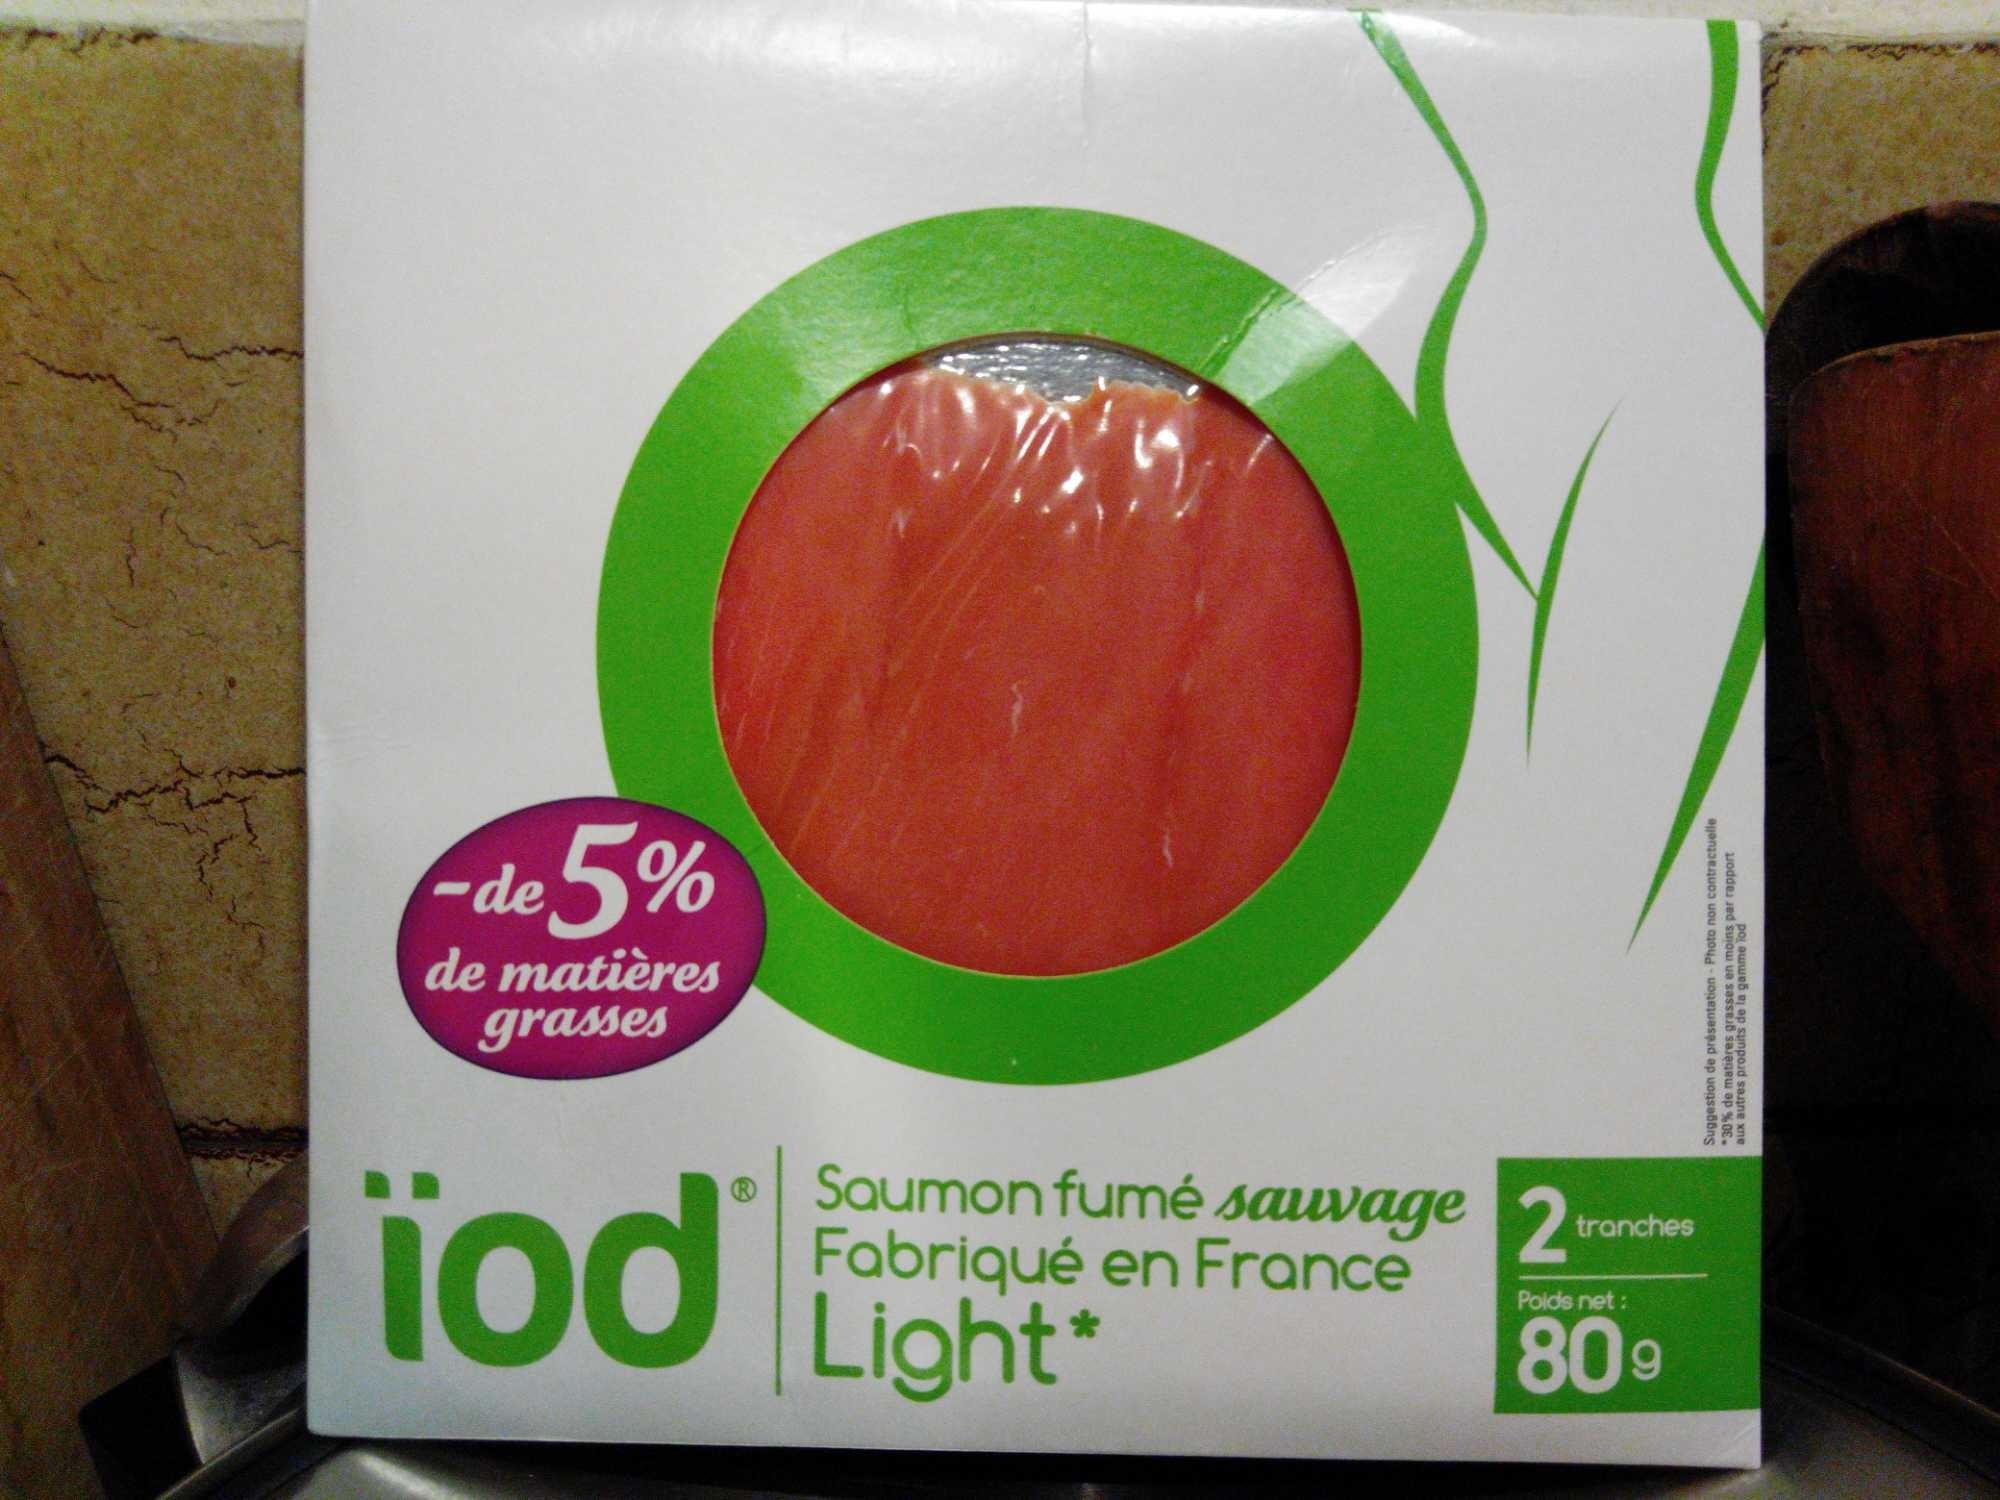 Saumon fumé sauvage Light - Product - fr